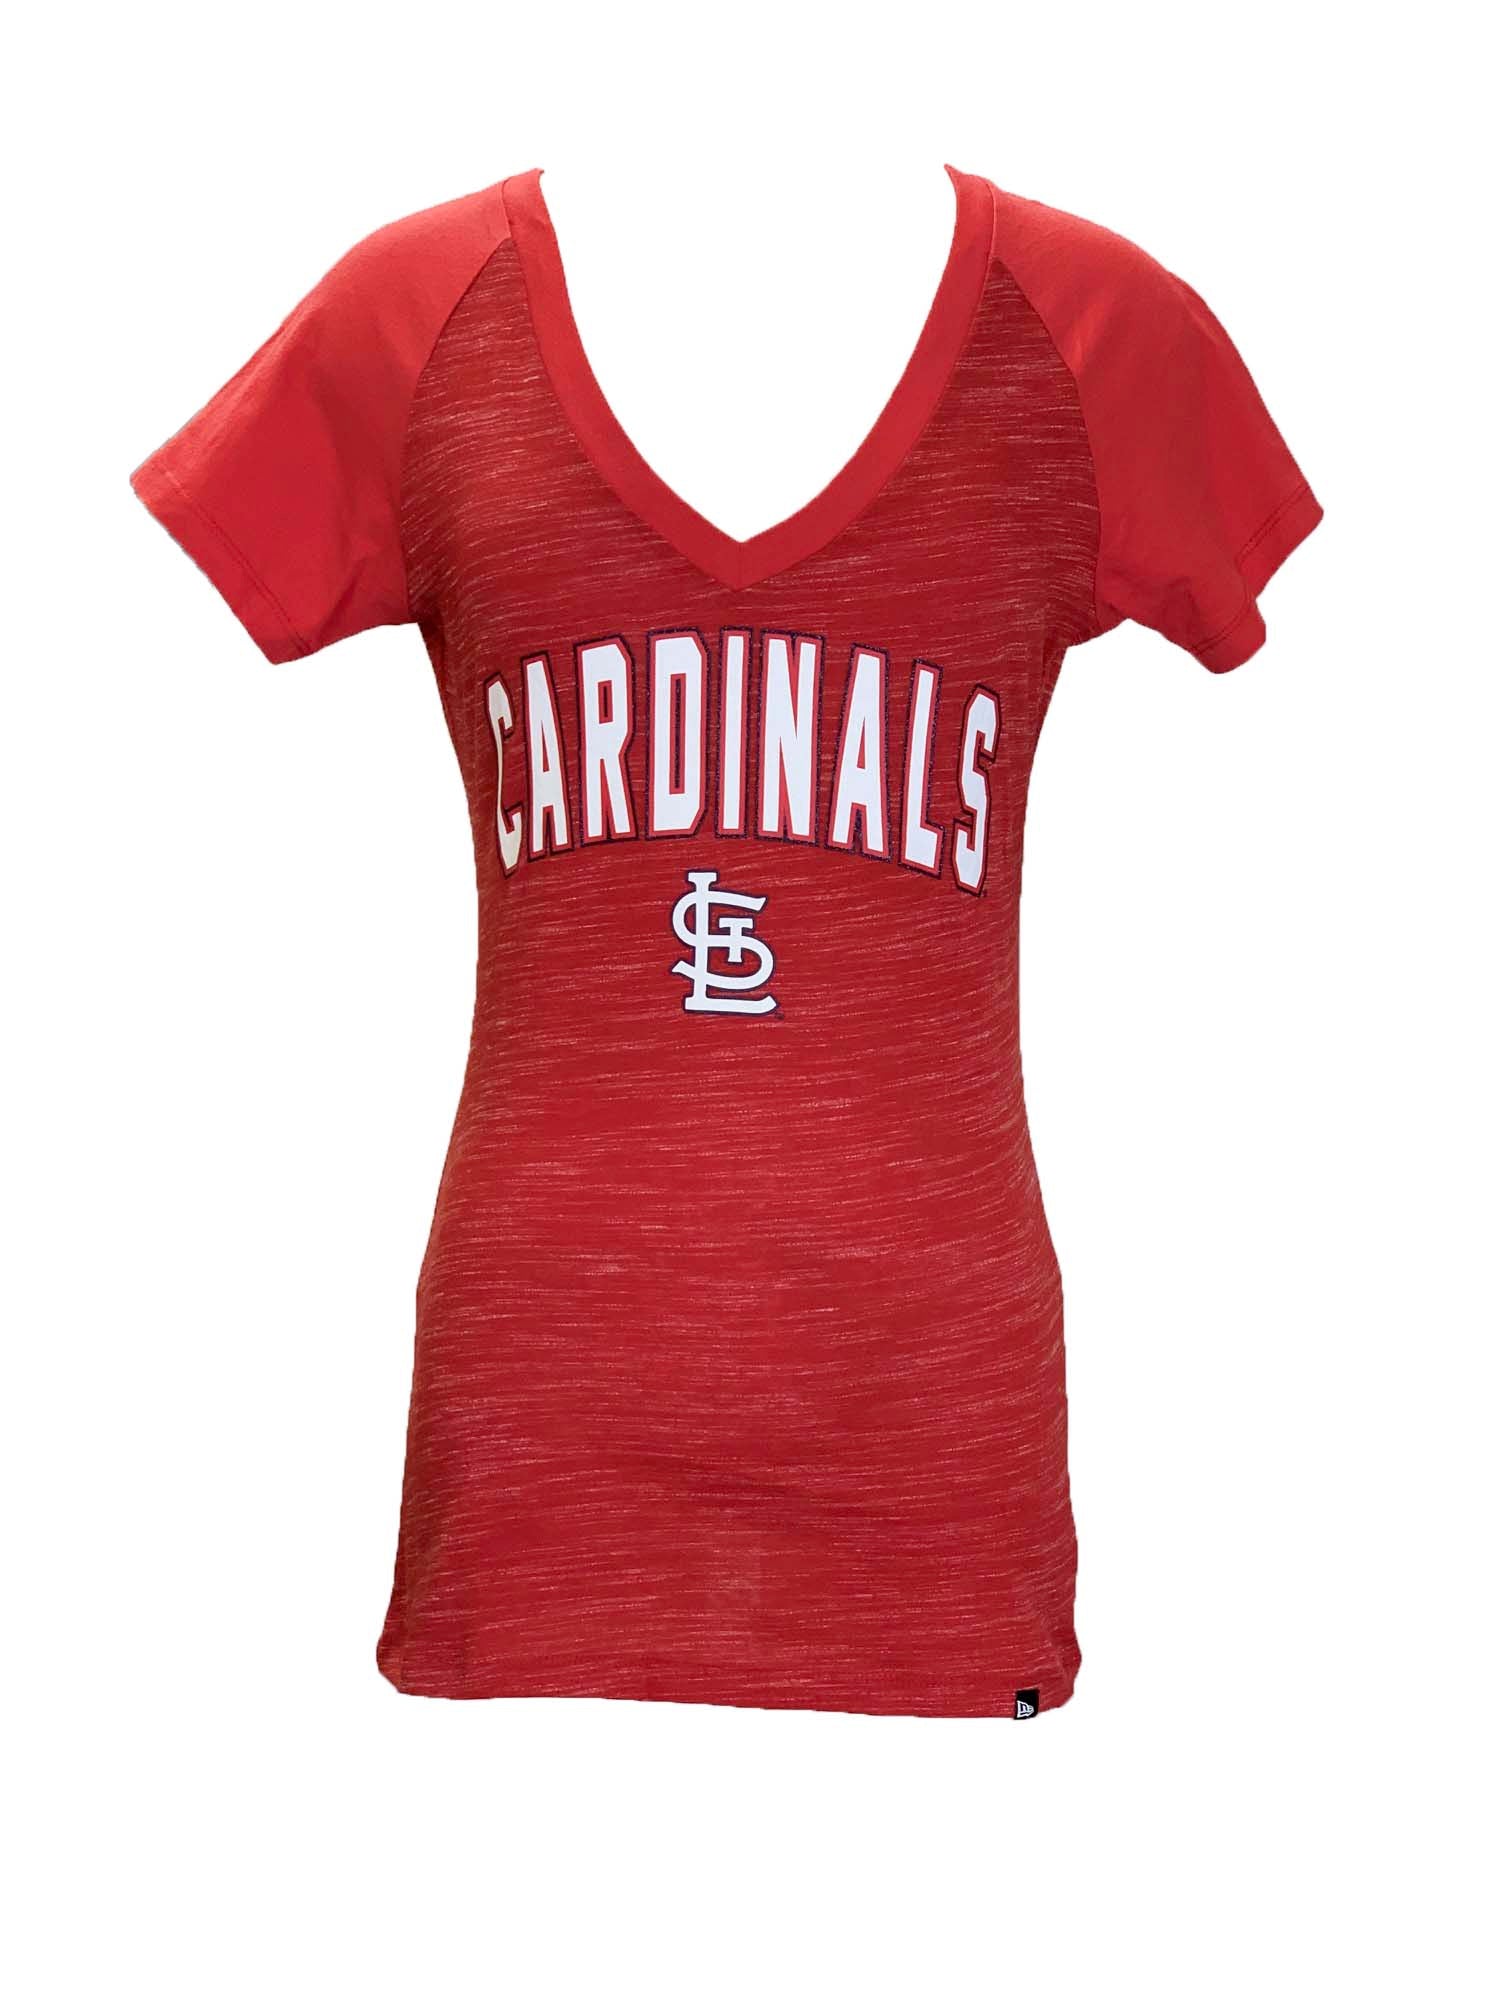 st louis cardinals ladies shirts